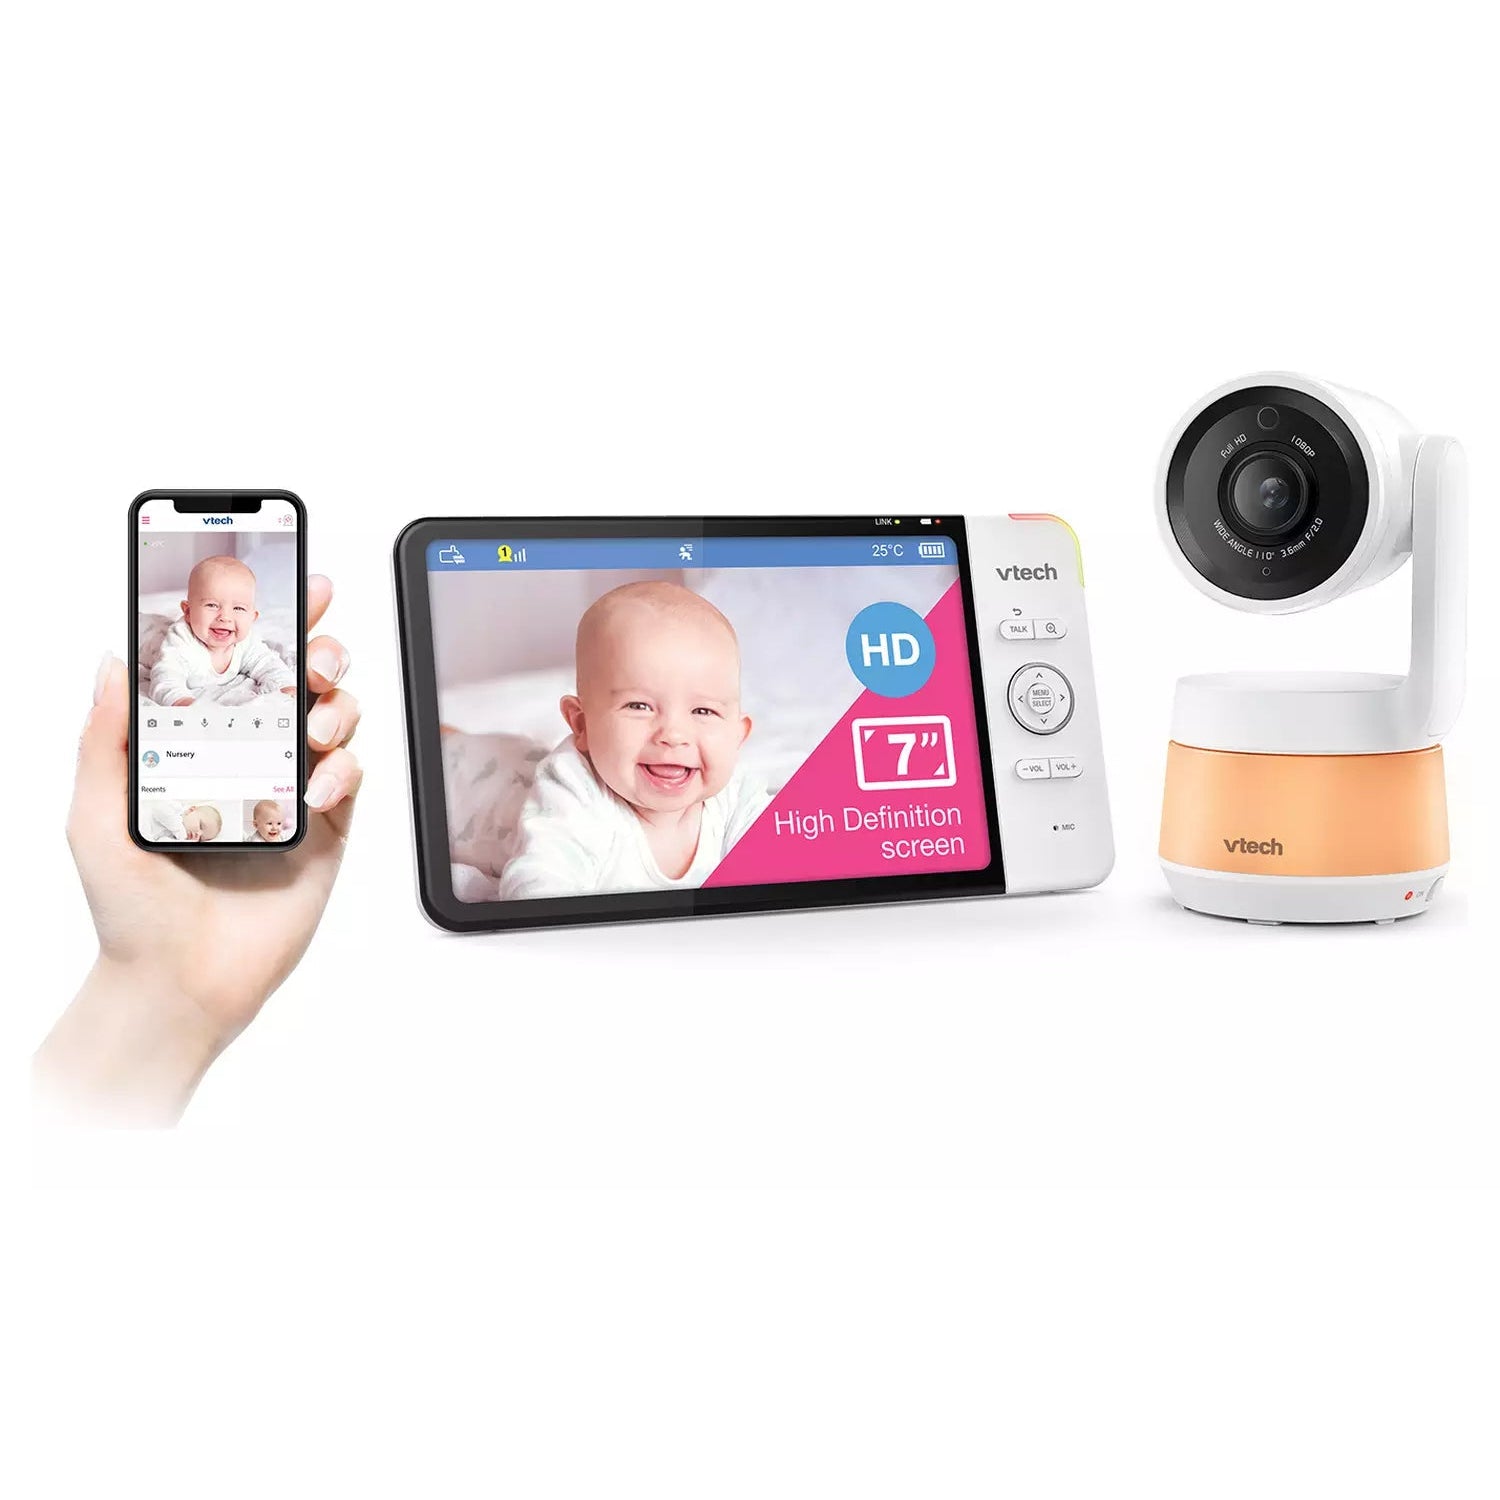 VTech RM7767HD Smart Video Baby Monitor - White - Refurbished Fair